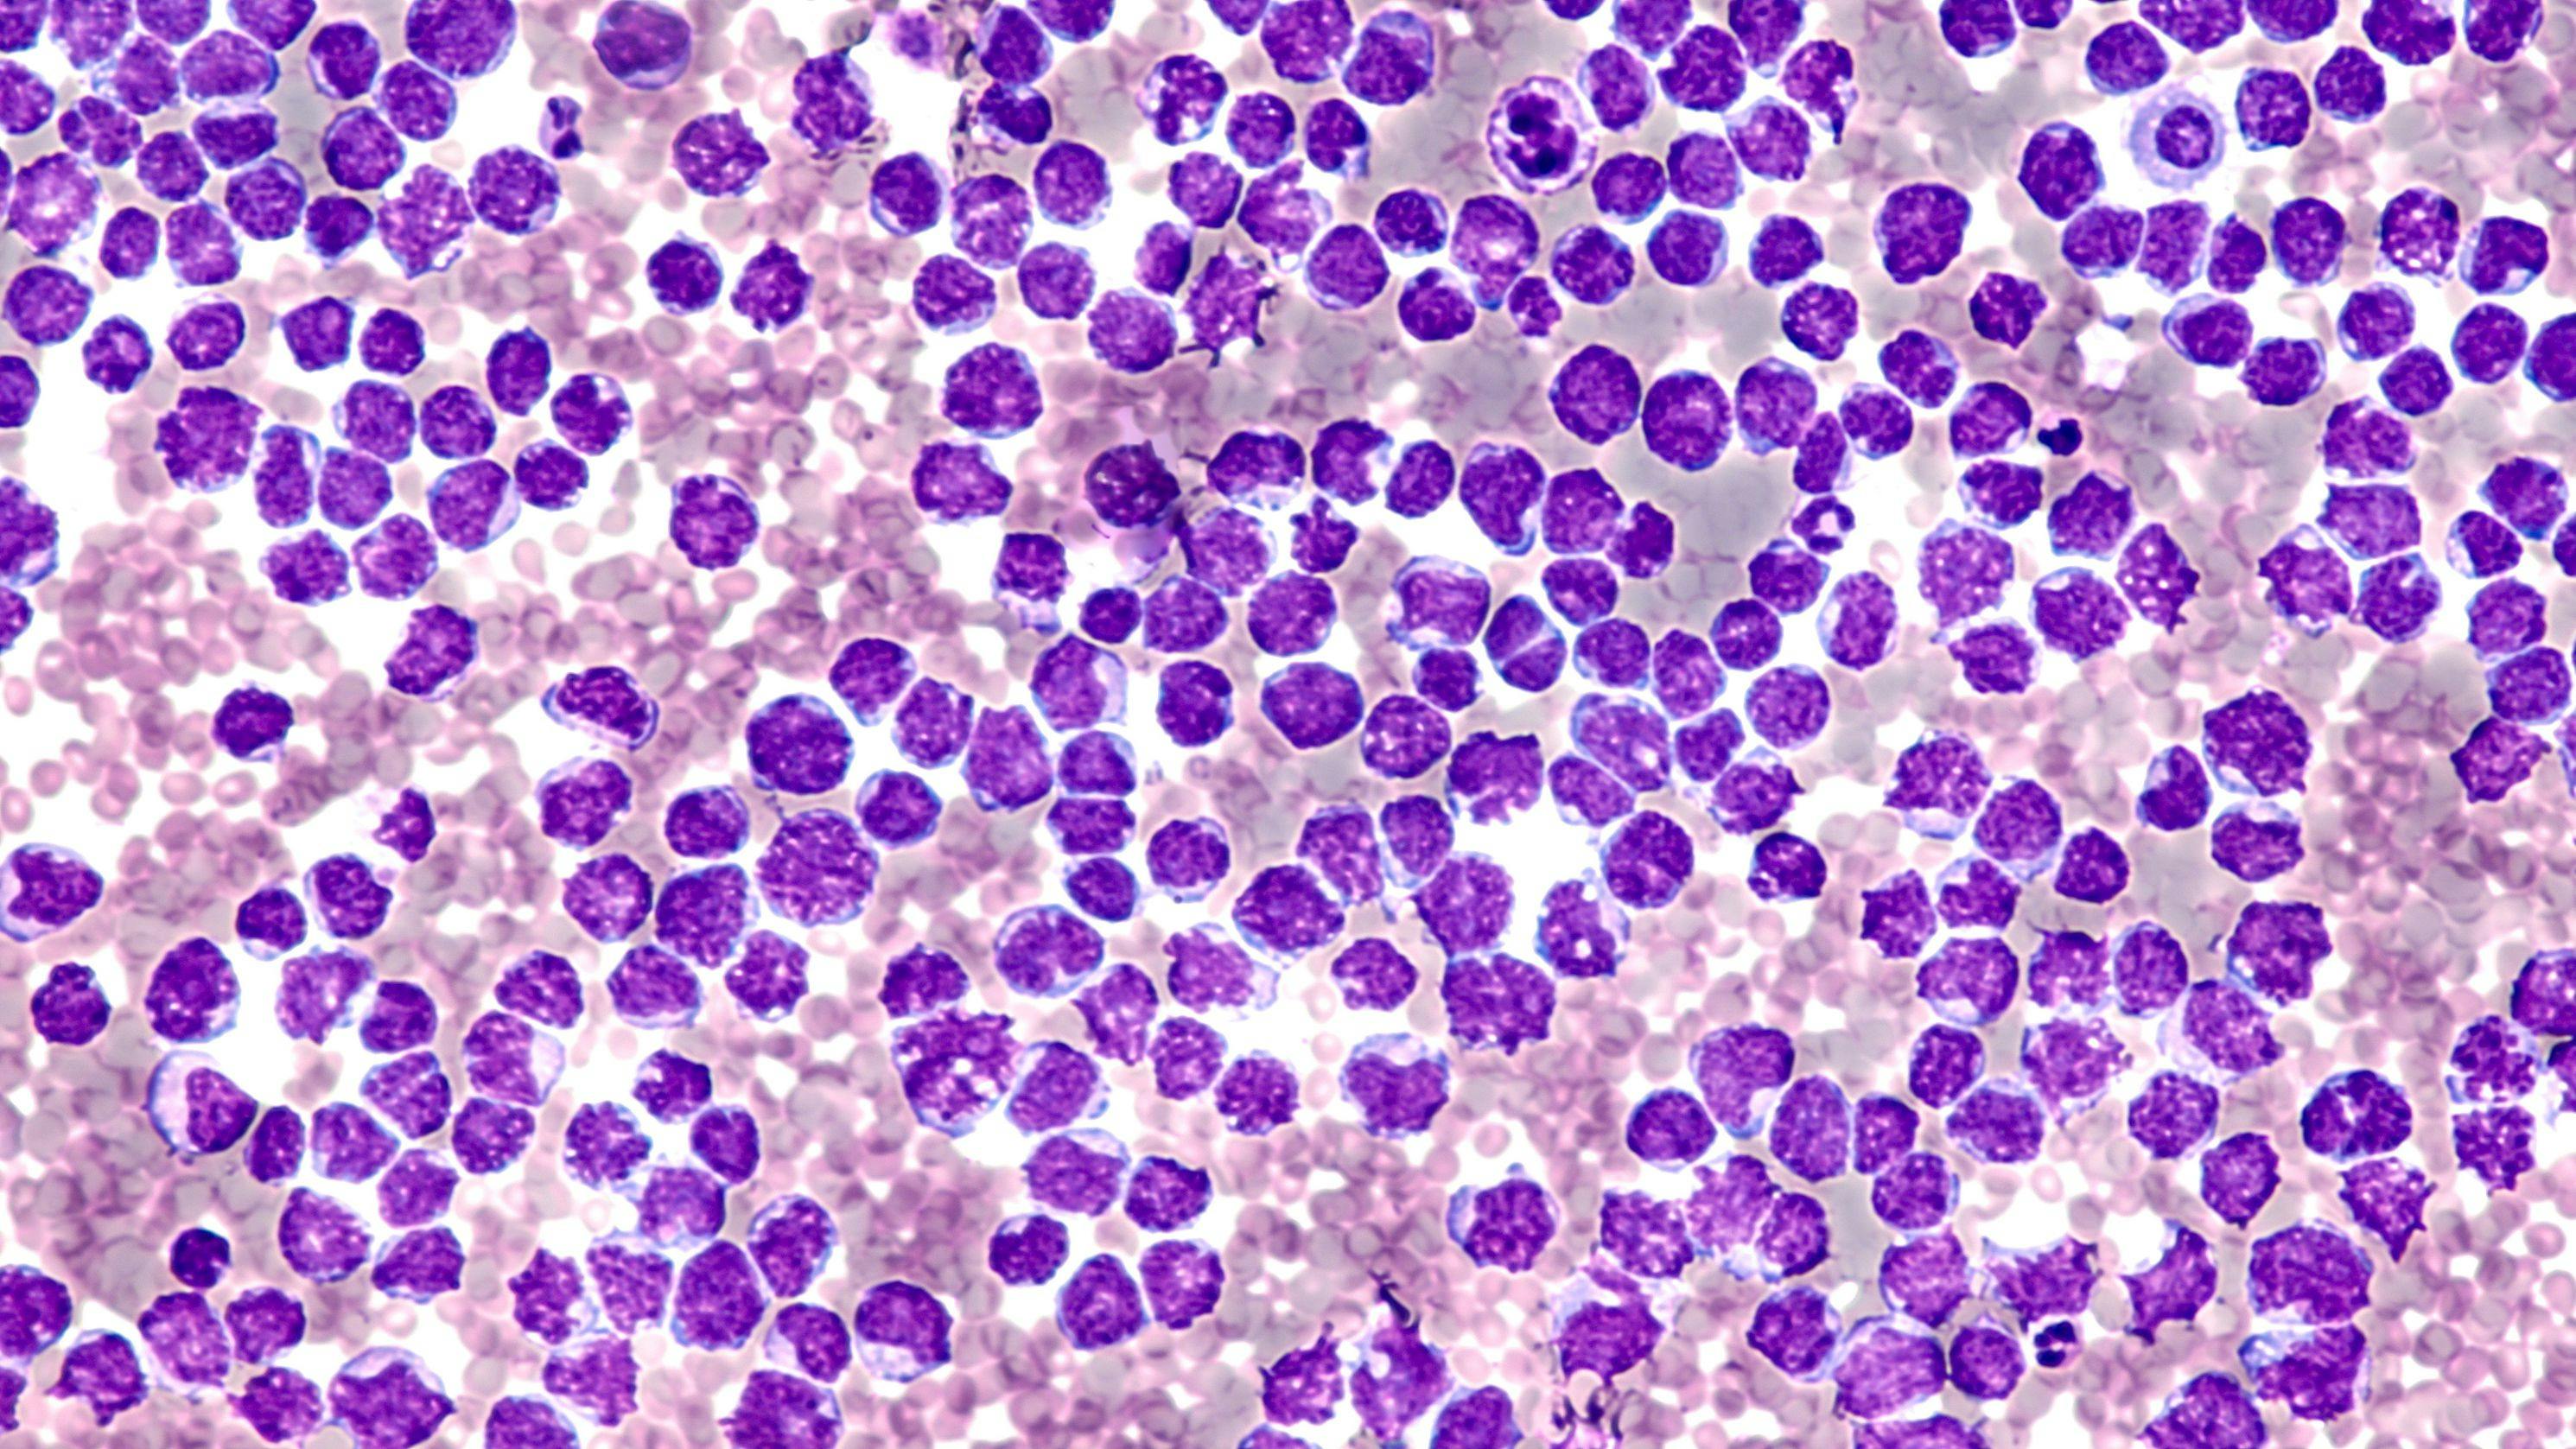 malignant cells of a mantle cell lymphoma: © David A Litman - stock.adobe.com